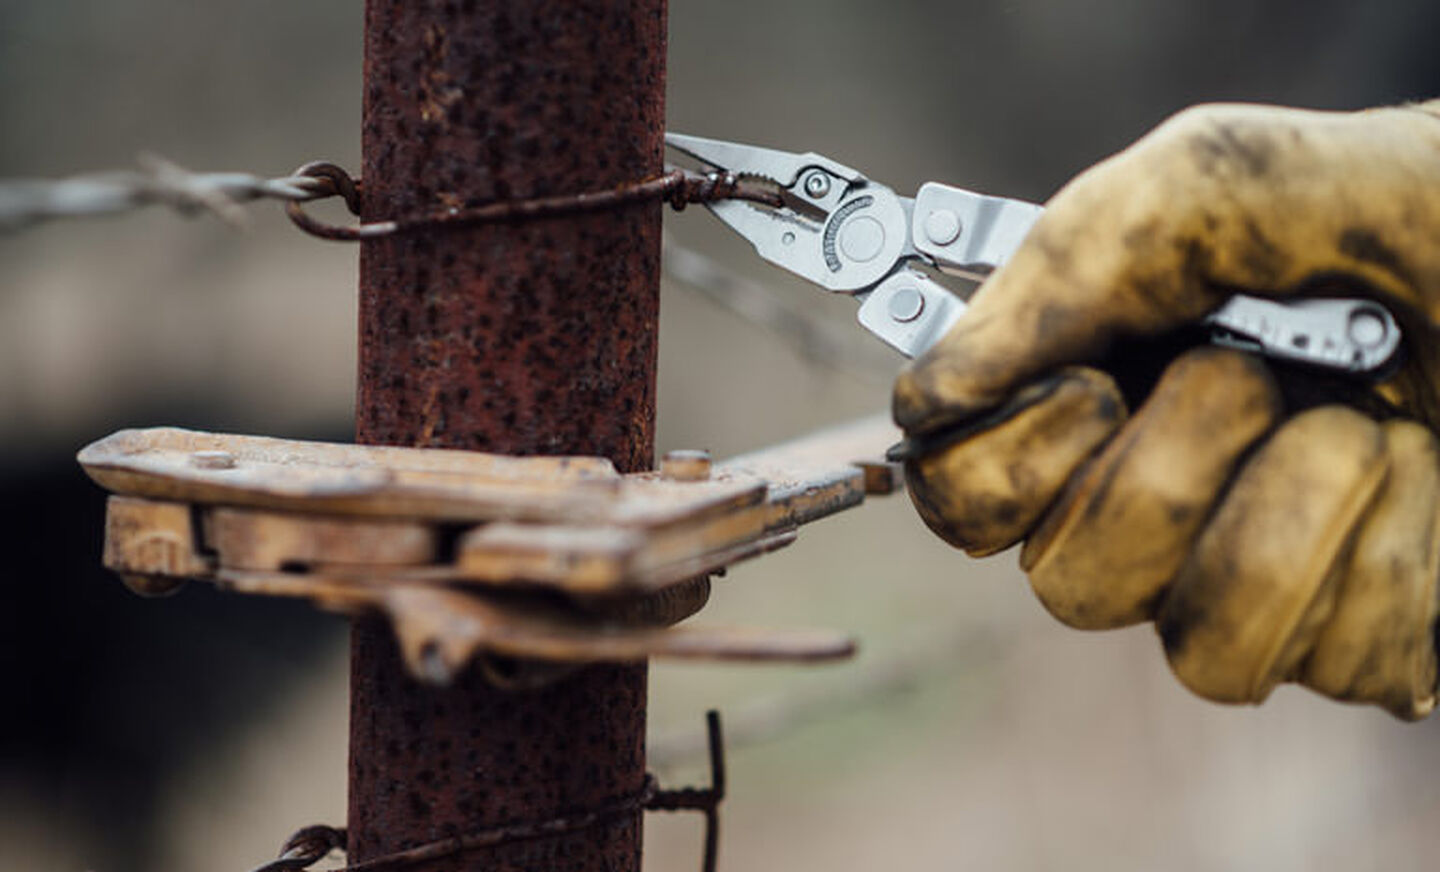 Leatherman stainless steel heritage rebar multi-tool in hand, cutting metal wire